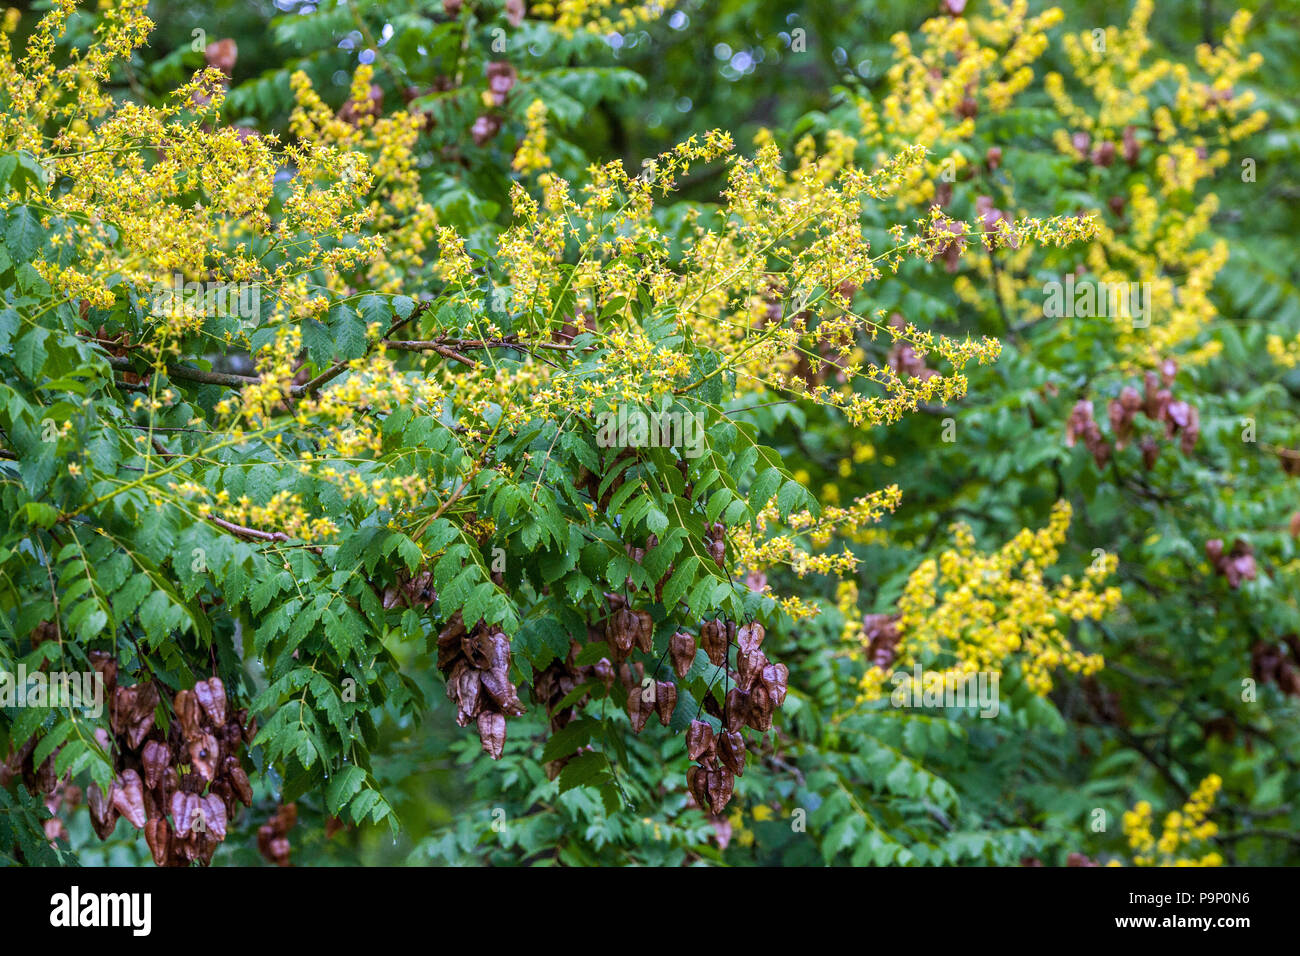 Koelreuteria paniculata 'Apiculata', goldenrain tree, yellow flowers and fruits seeds Stock Photo